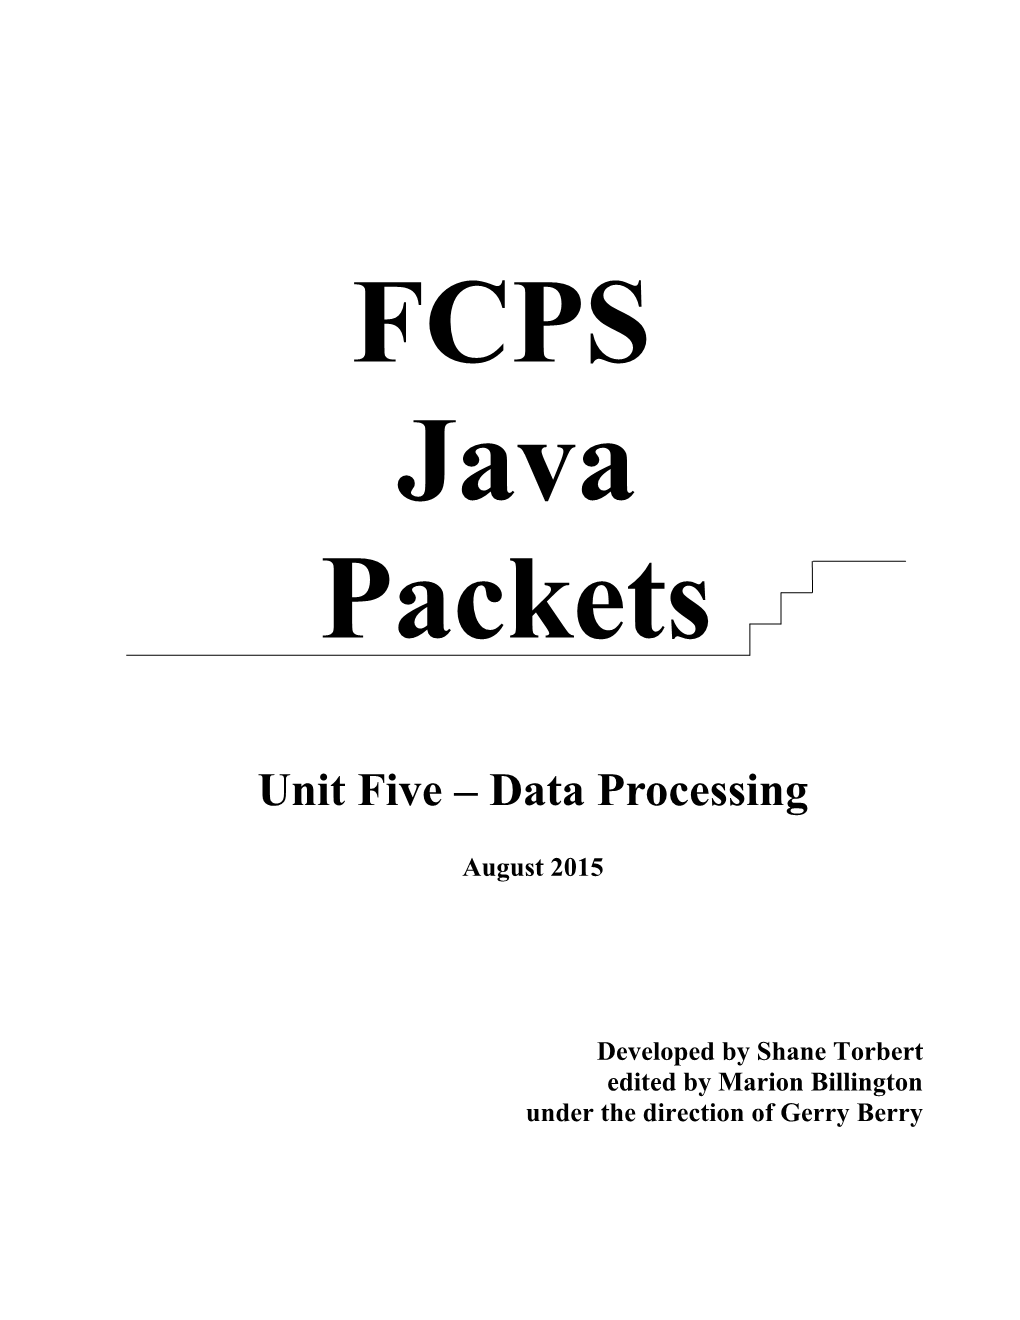 Unit Five Data Processing